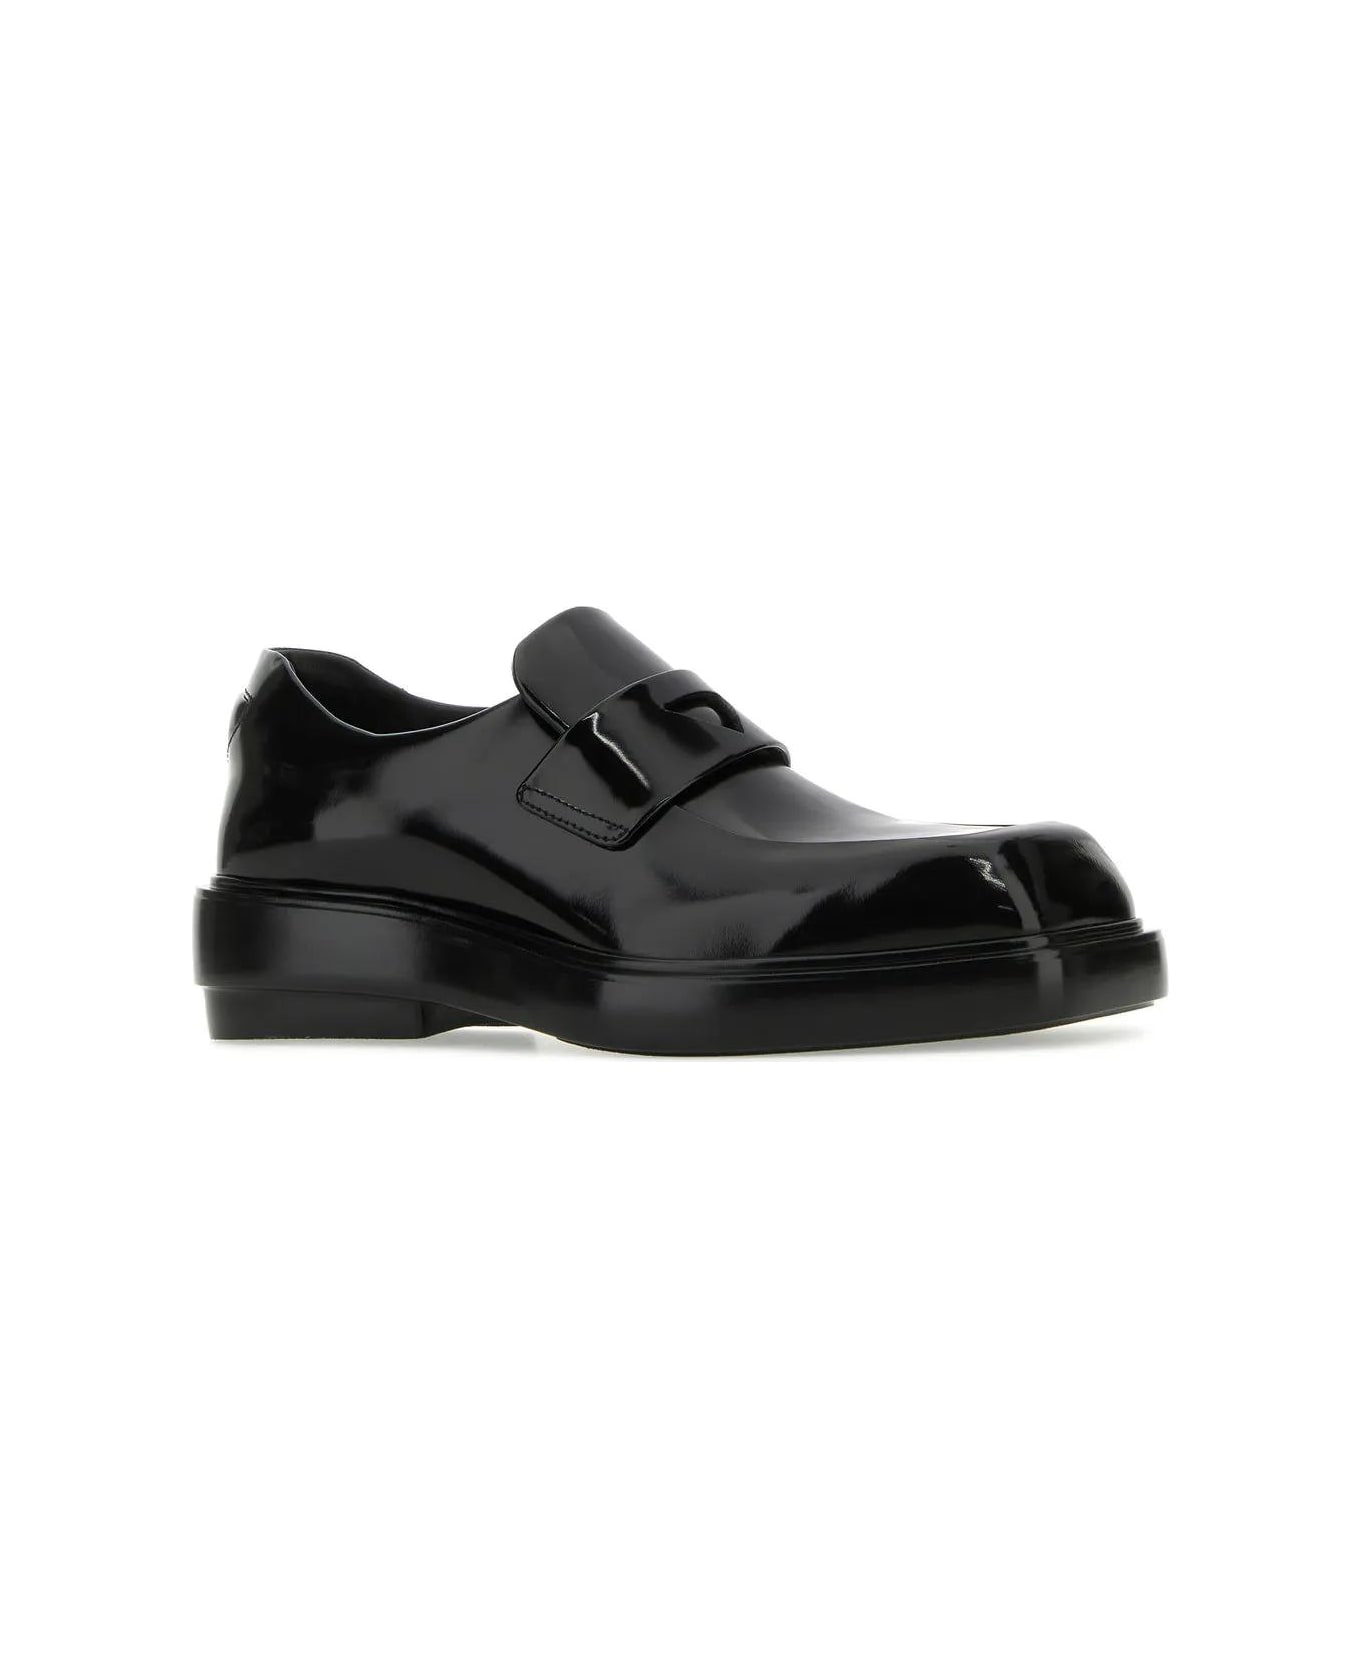 Prada Black Leather Loafers - Black フラットシューズ